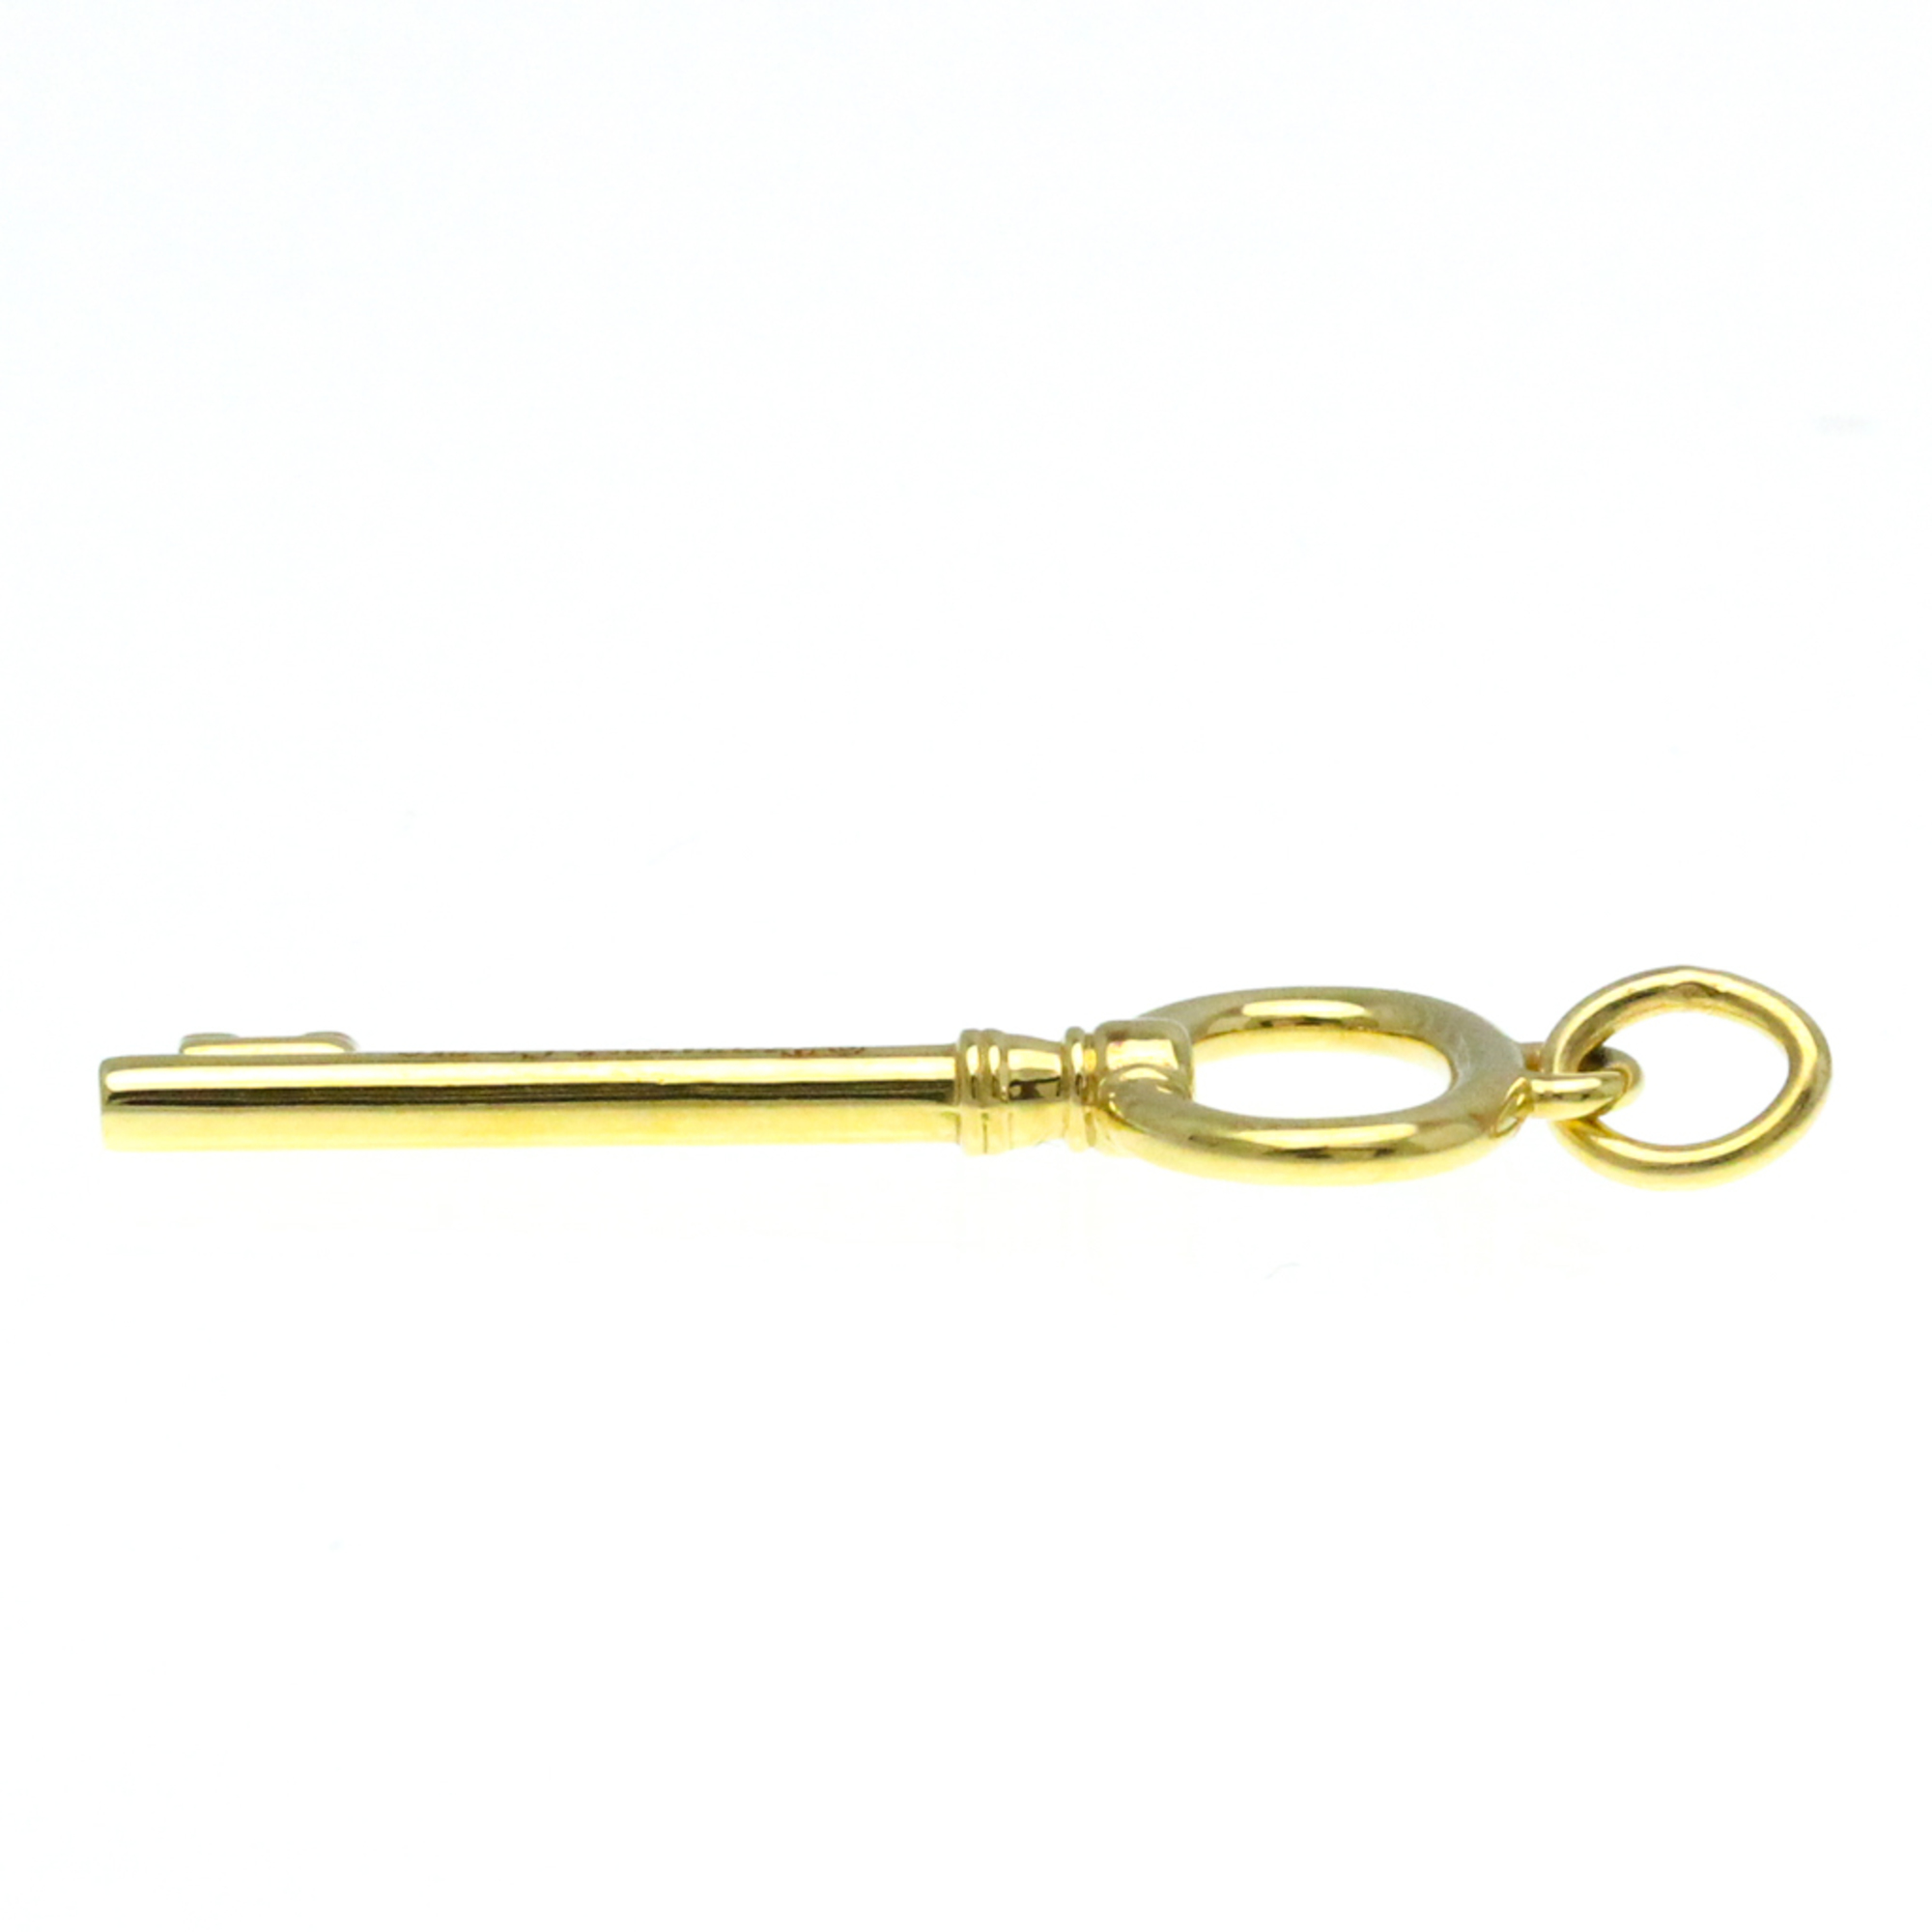 Tiffany Oval Key Charm Yellow Gold (18K) No Stone Women's Fashion Pendant Necklace (Gold)